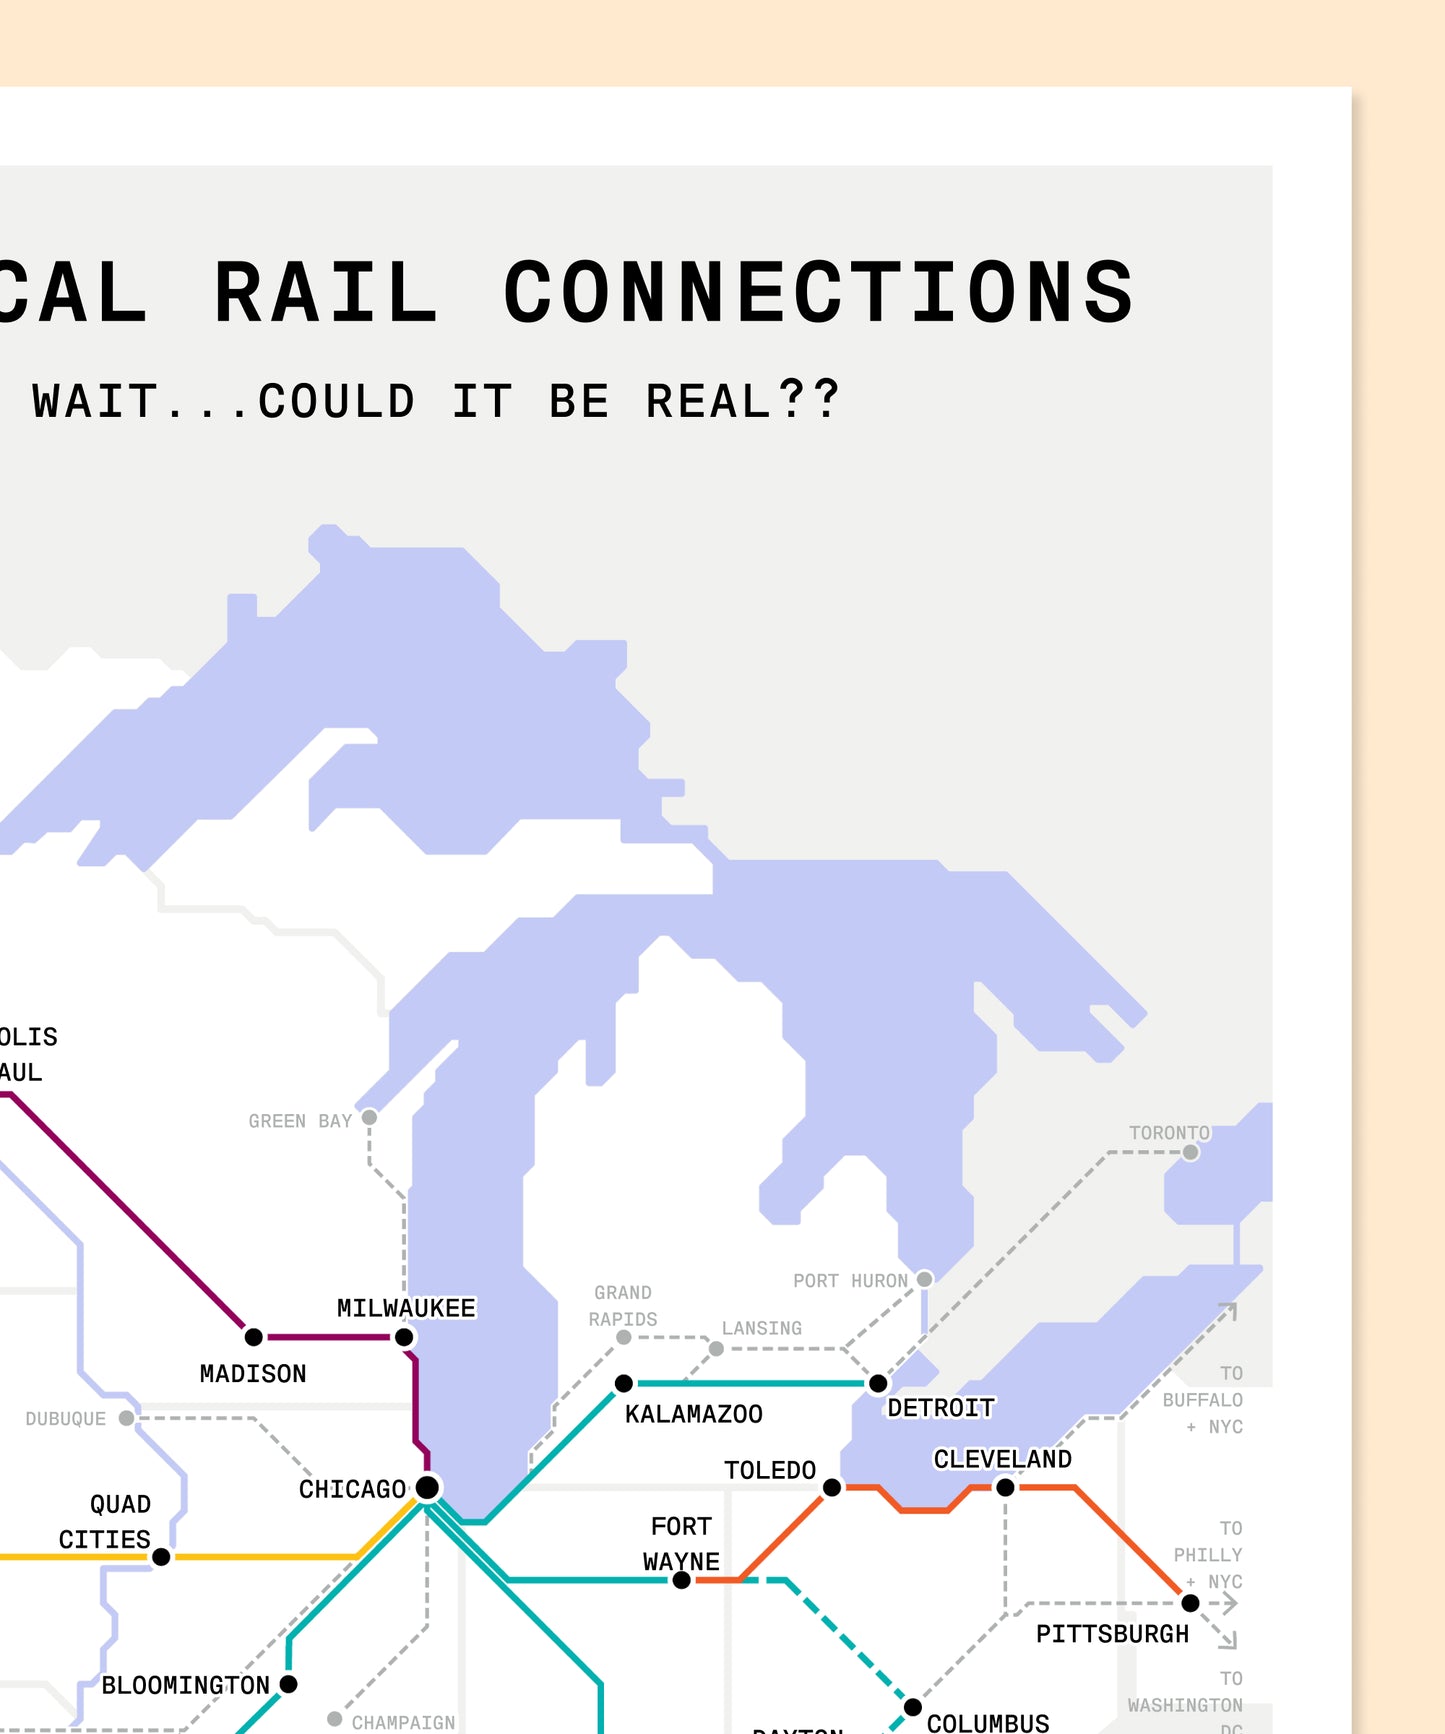 Fantastical Rail Connections